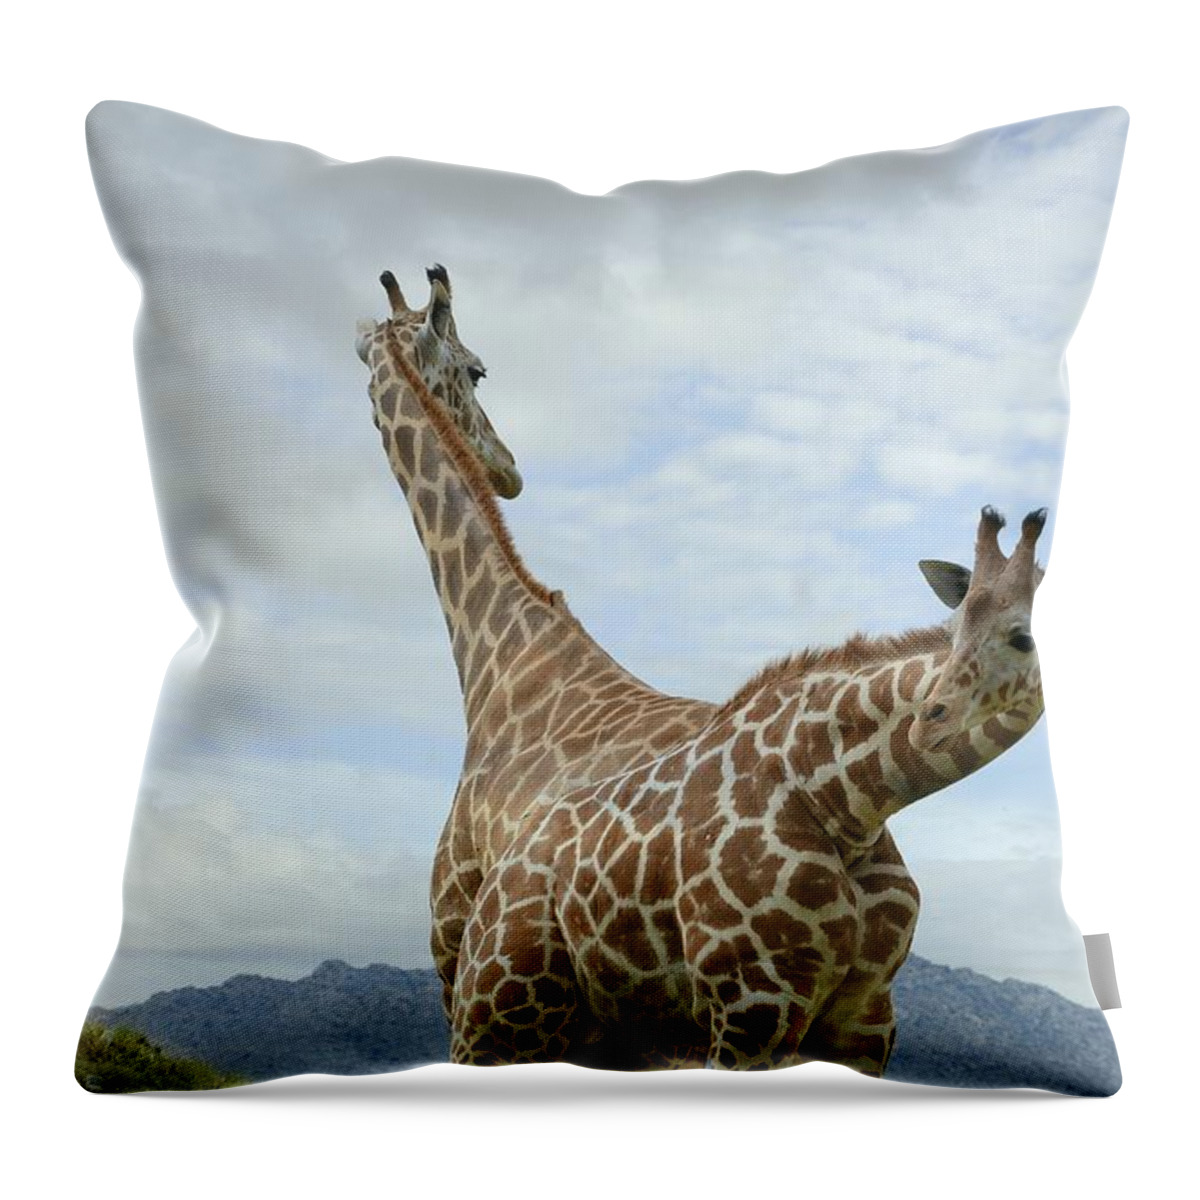 Giraffes Throw Pillow featuring the photograph Illusion by Fraida Gutovich